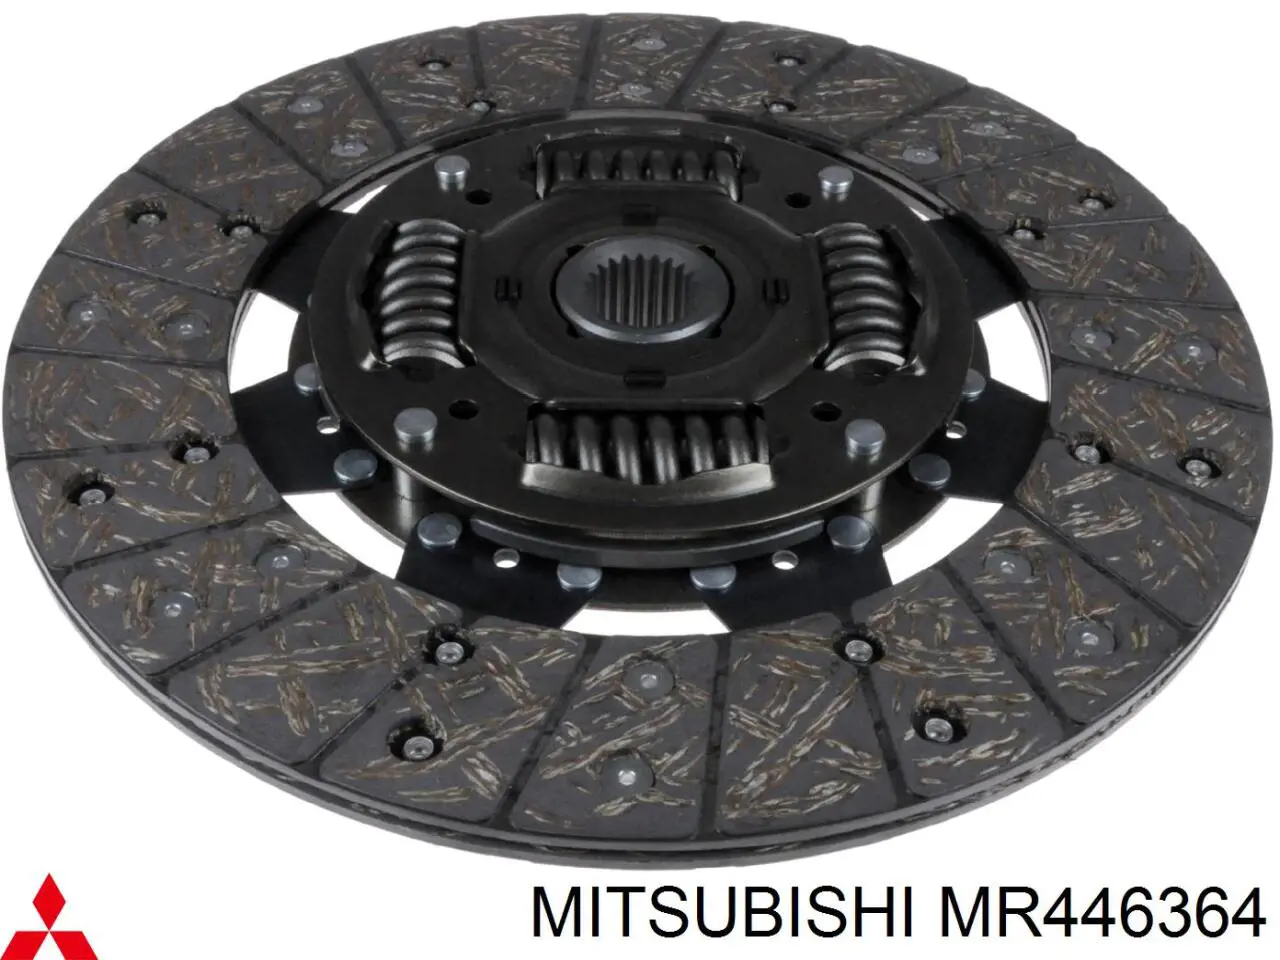 MR446364 Mitsubishi disco de embrague